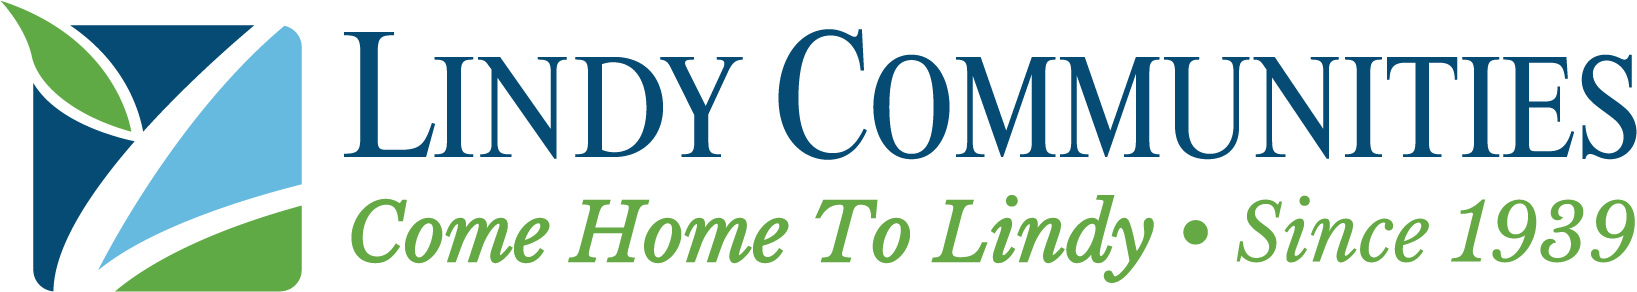 lindy communities logo